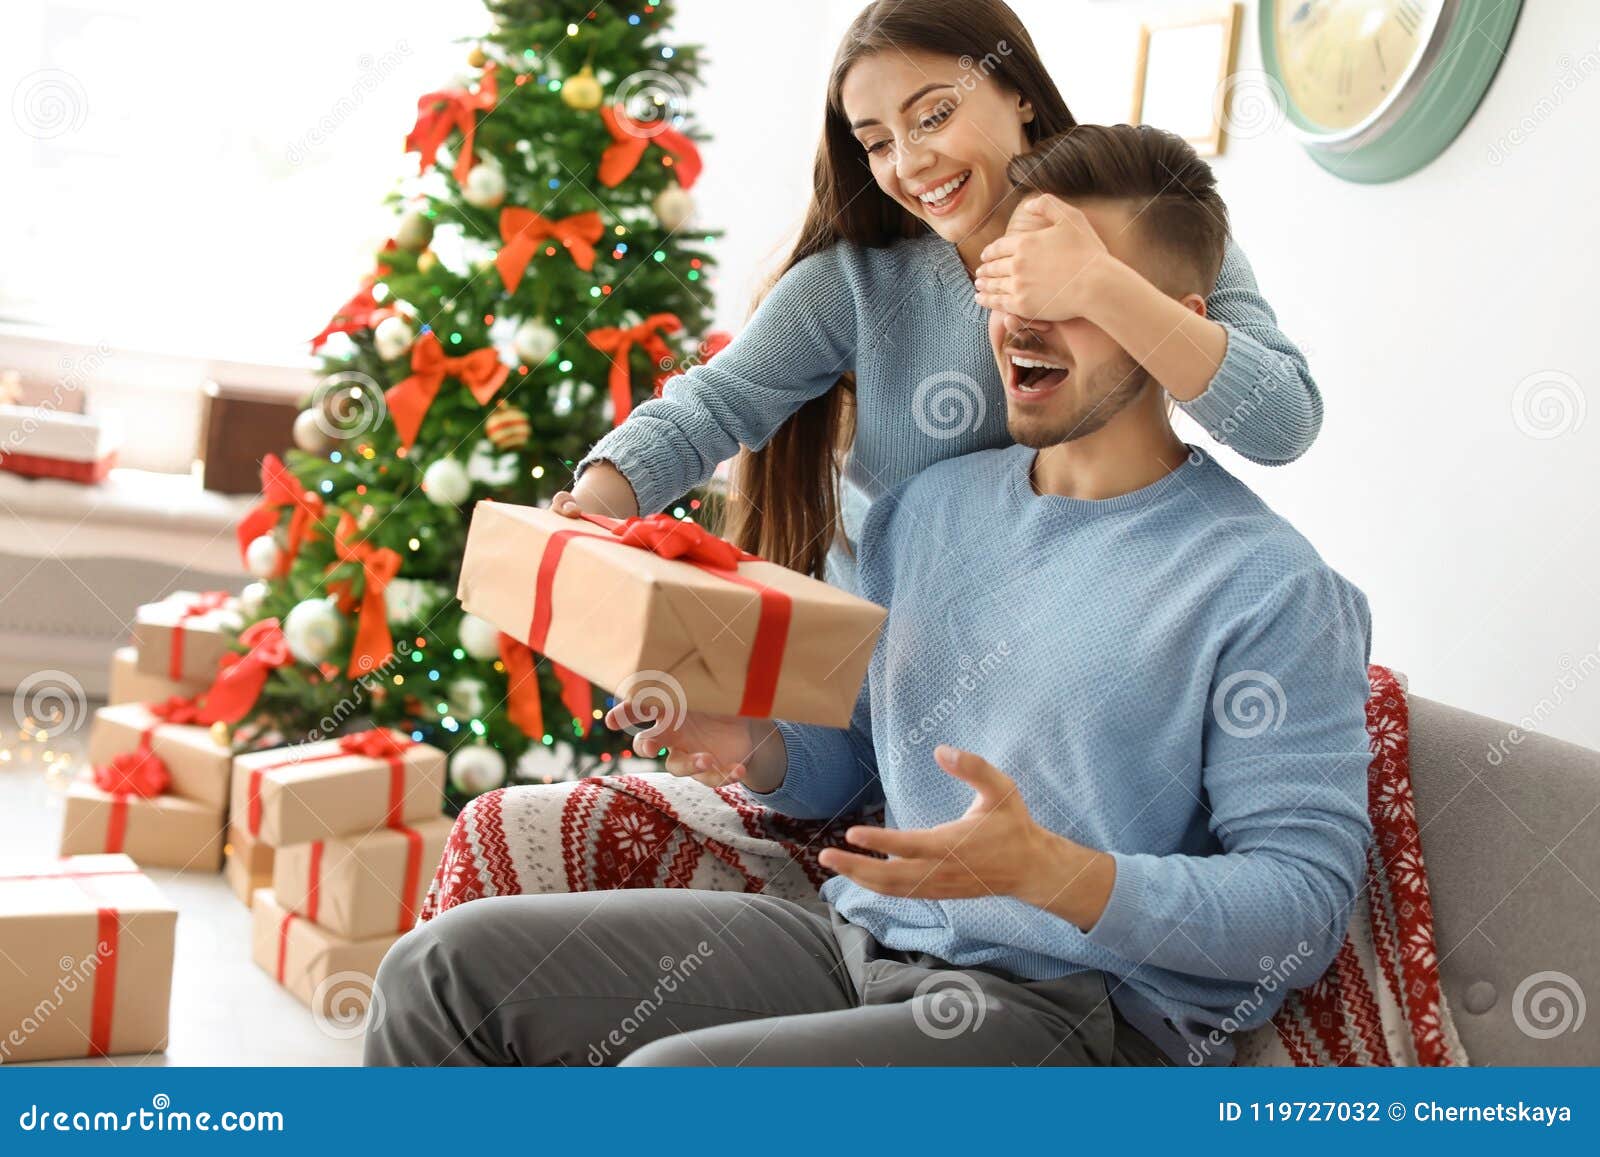 dating christmas gift hookup download